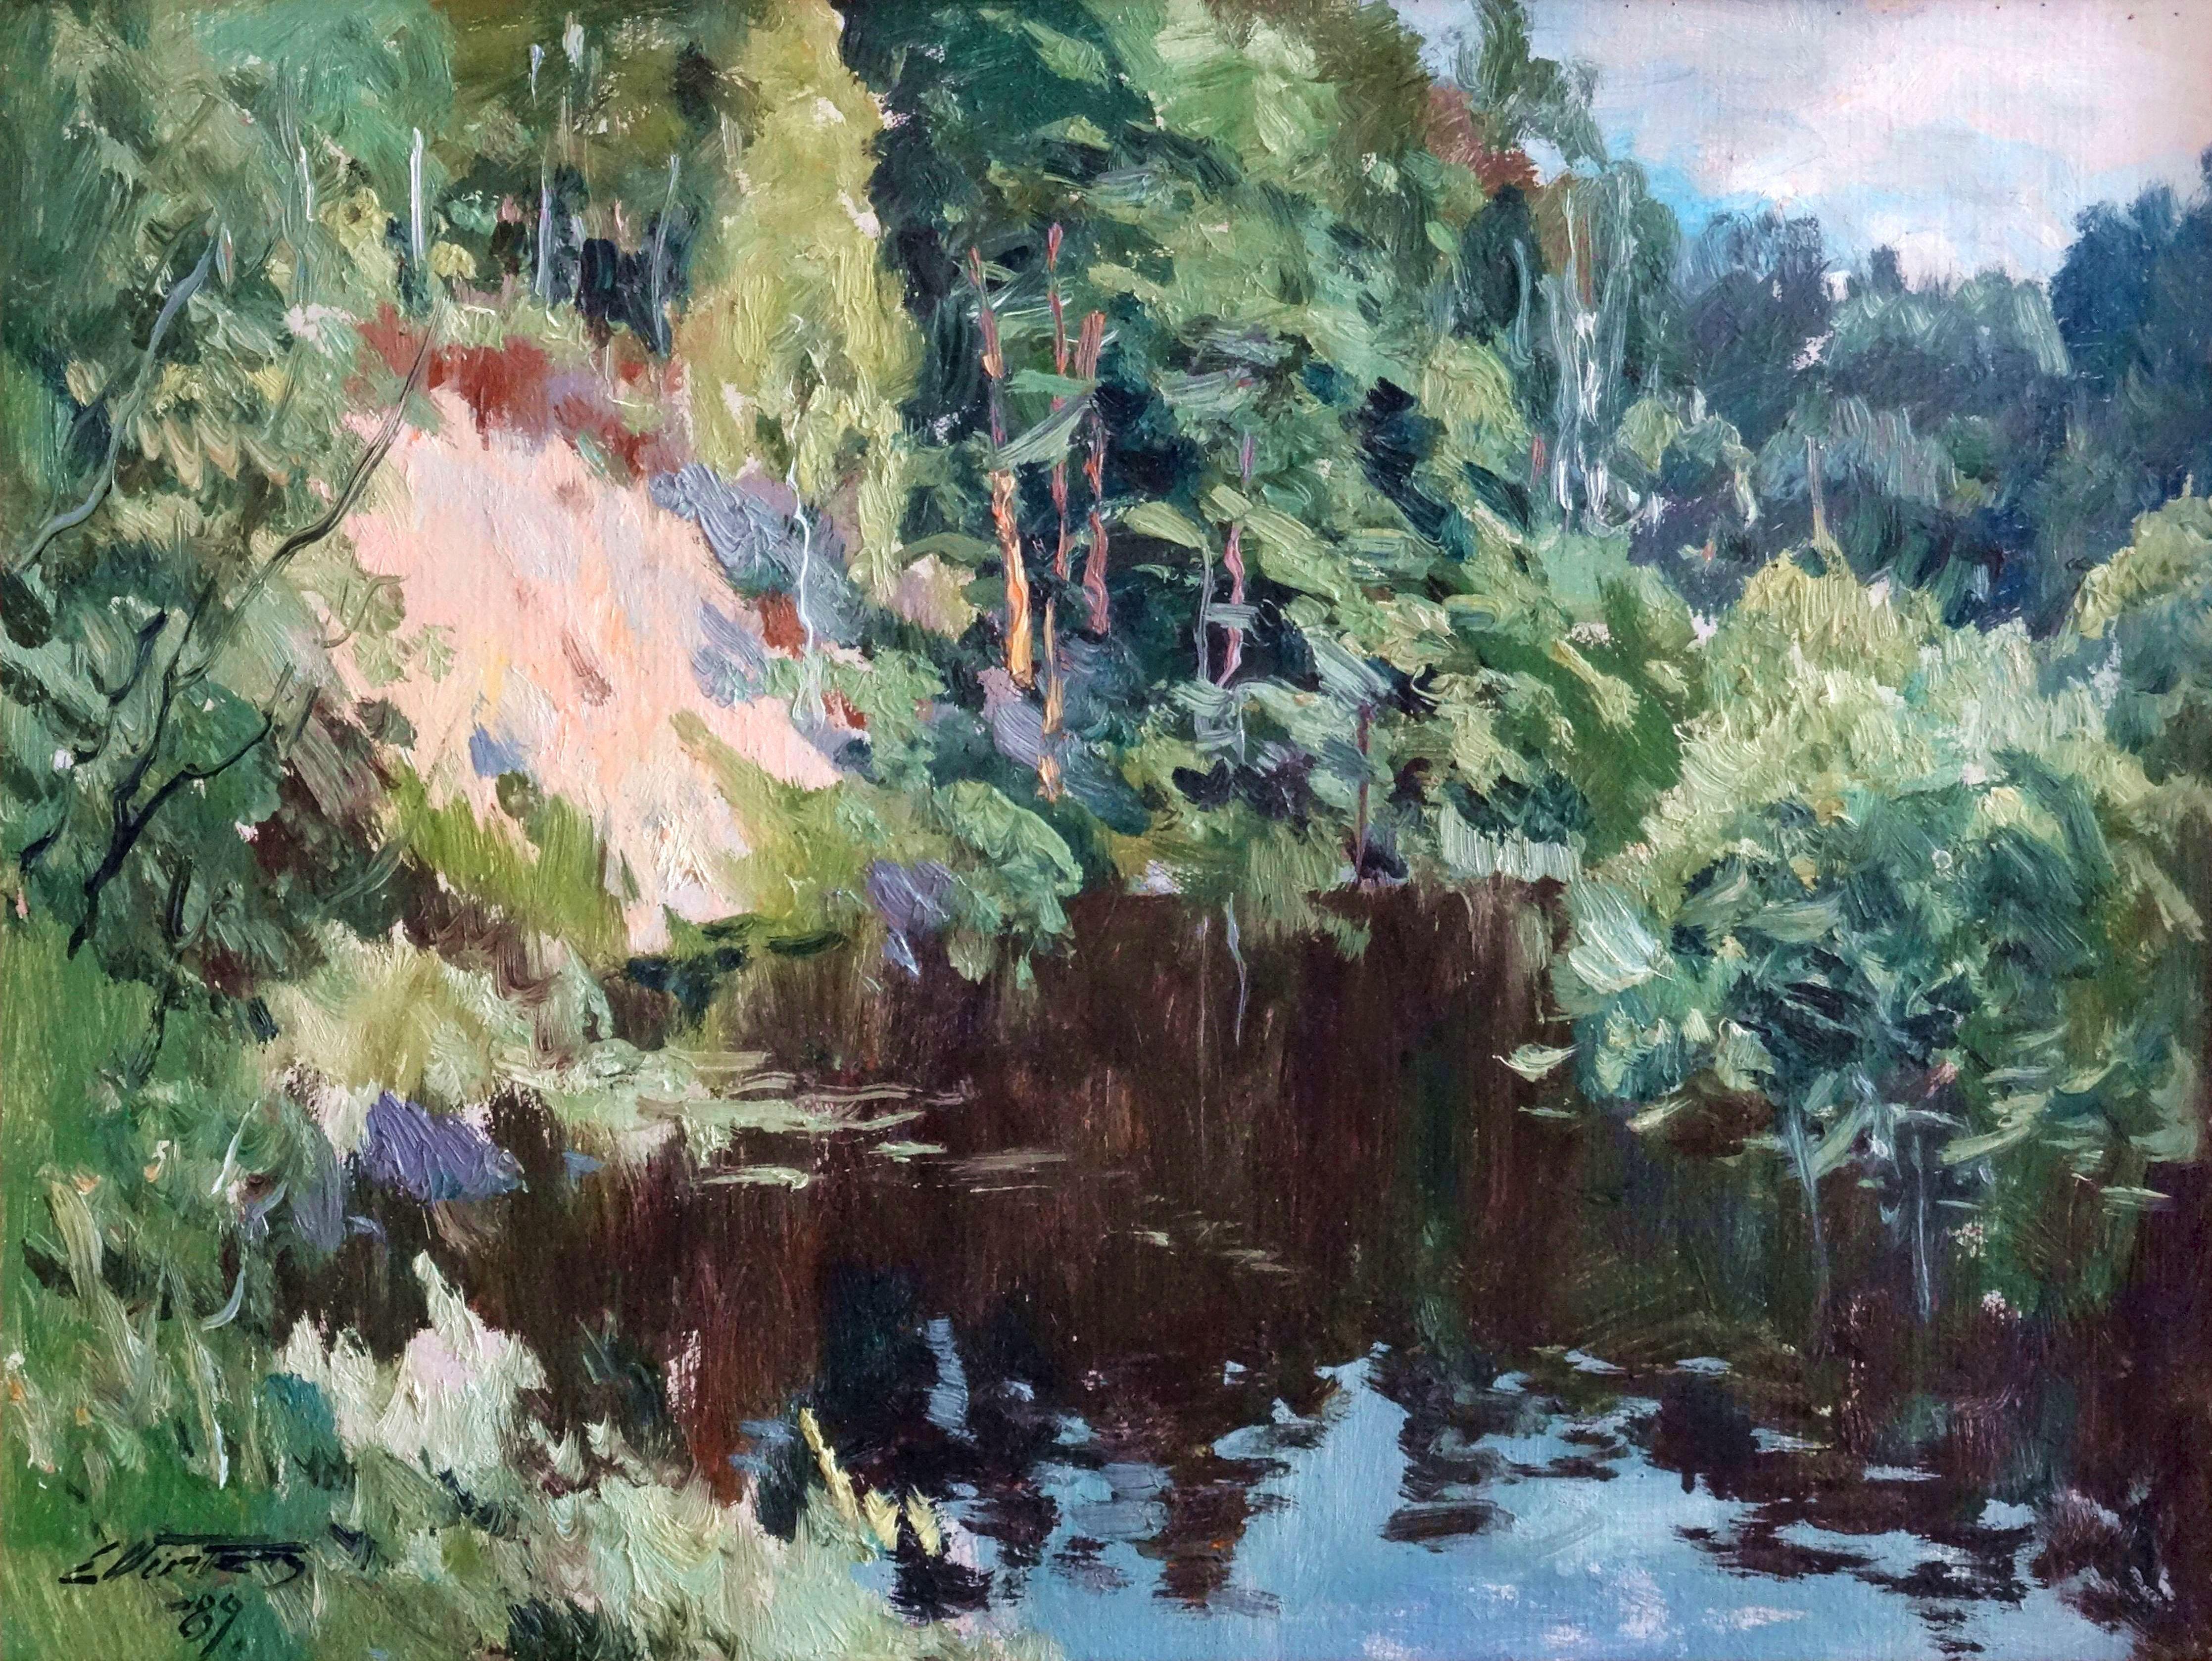 Edgars Vinters Landscape Art - The river. 1989, oil on cardboard, 46x60, 5 cm